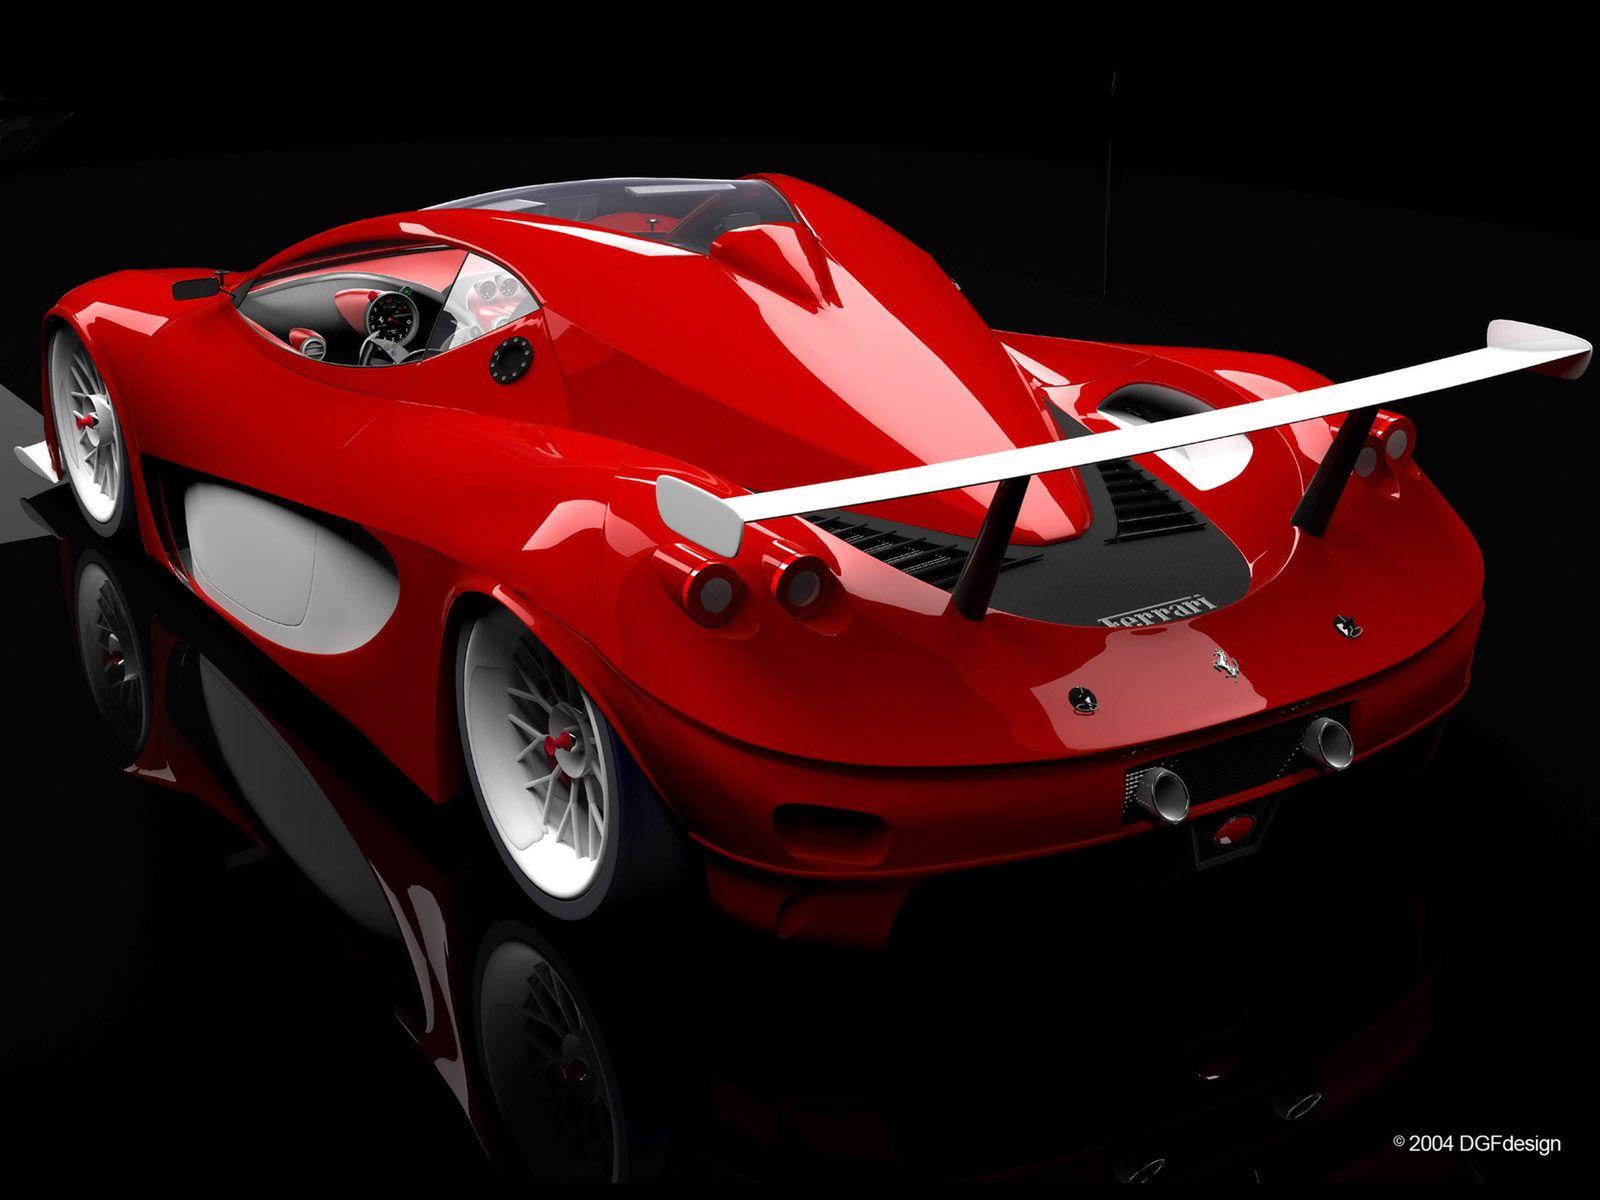 Ferrari Cars Wallpaper, Full HD 1080p, Best HD Ferrari Cars Pics